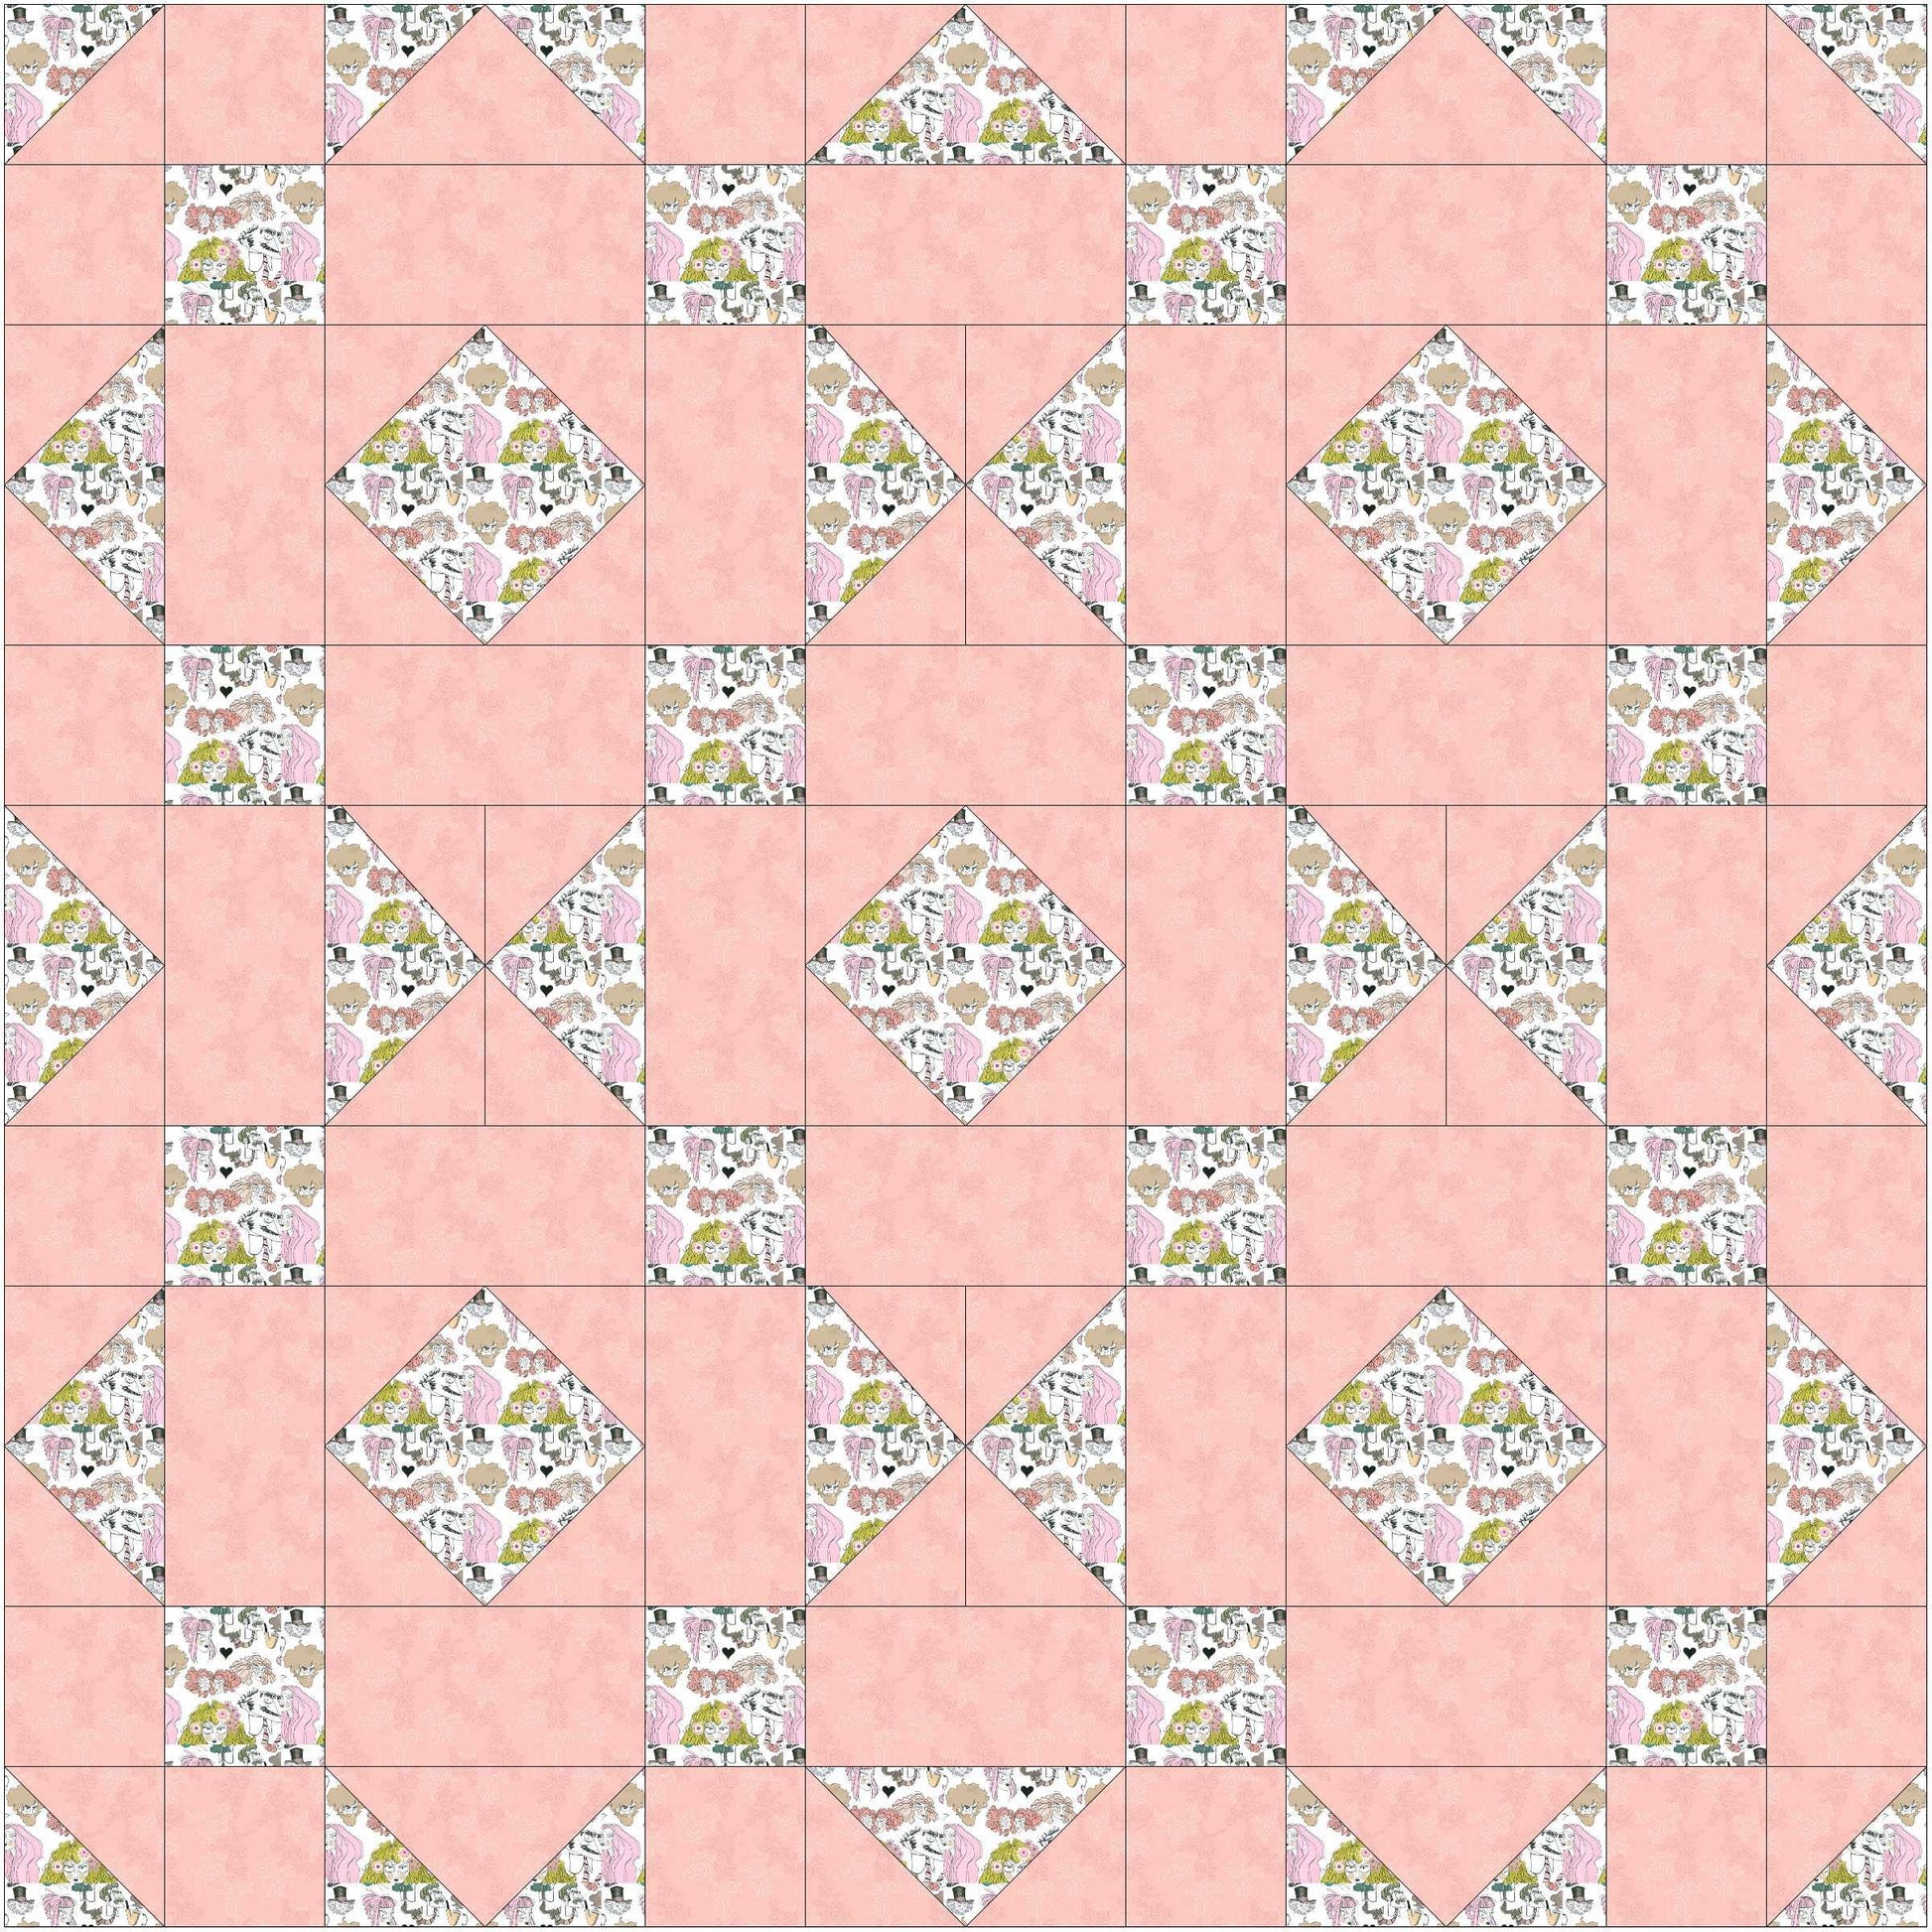 Fleur De Squares Quilt Pattern-Easy Confident Beginner Friendly Quilt Project - Sew Much